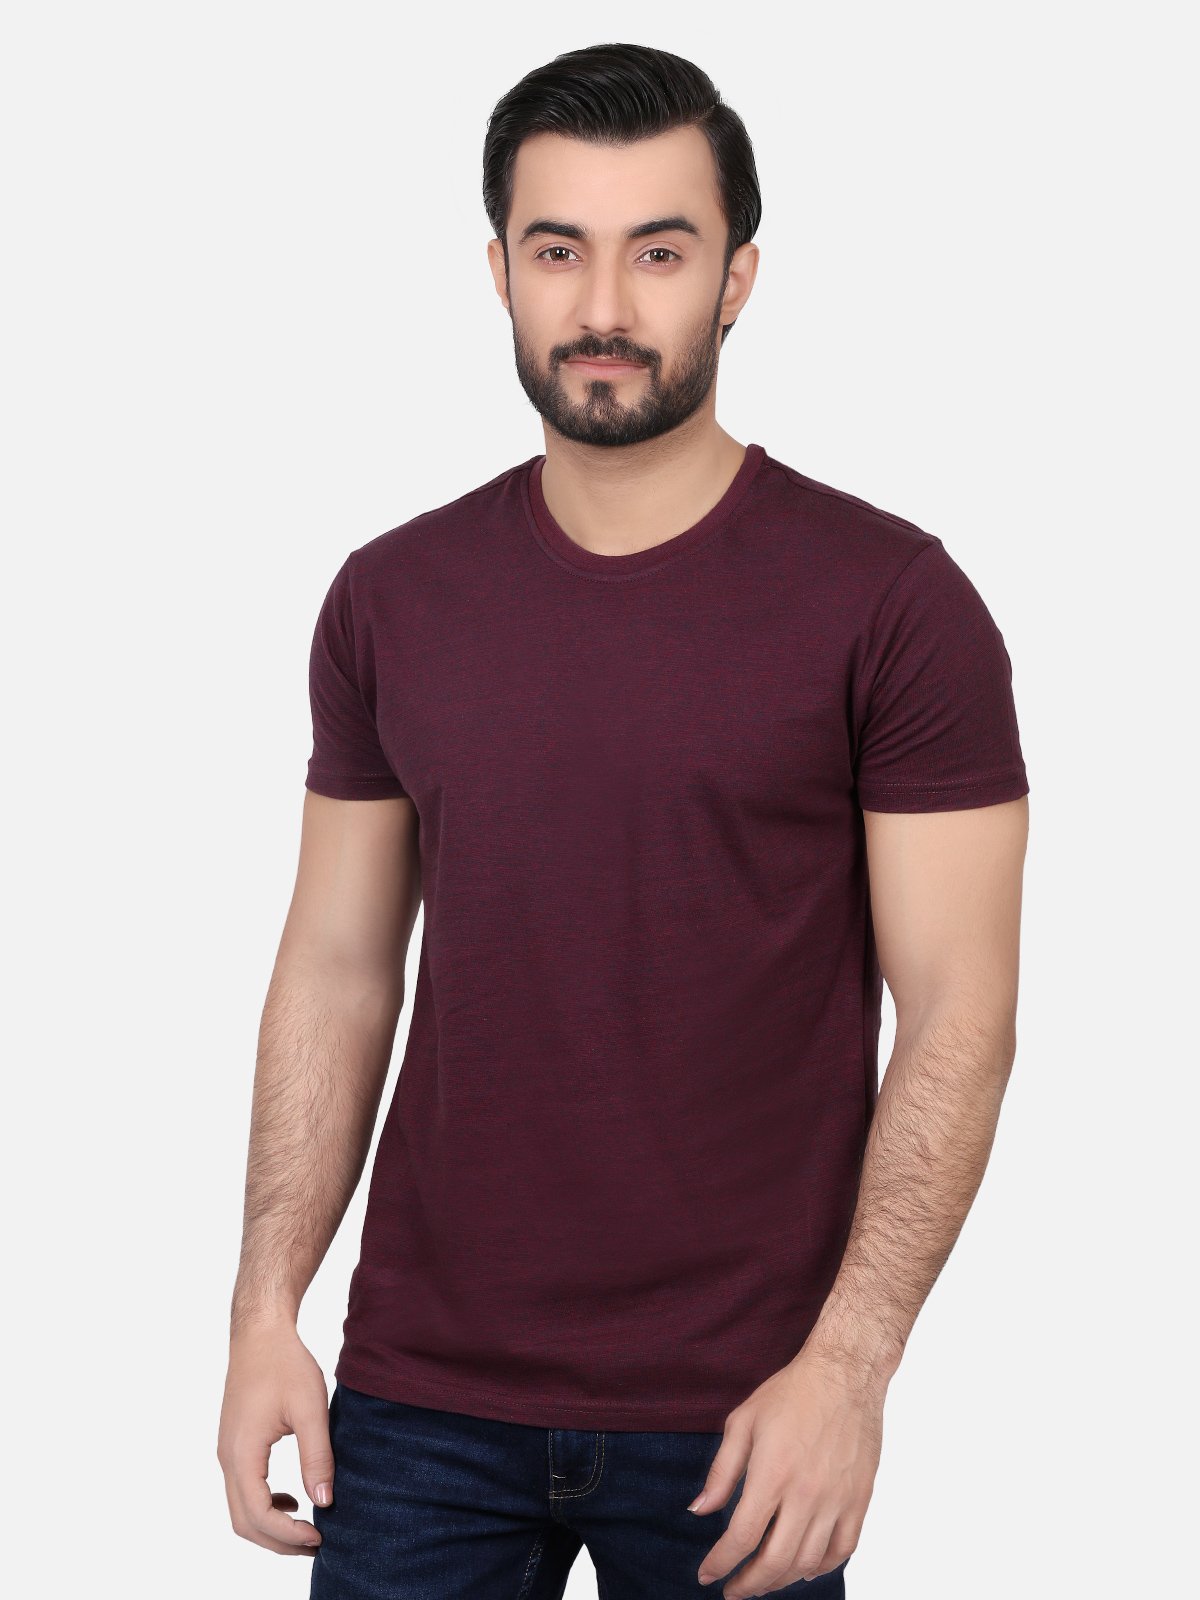 Men's Basic T-Shirt - FMTBT19-056